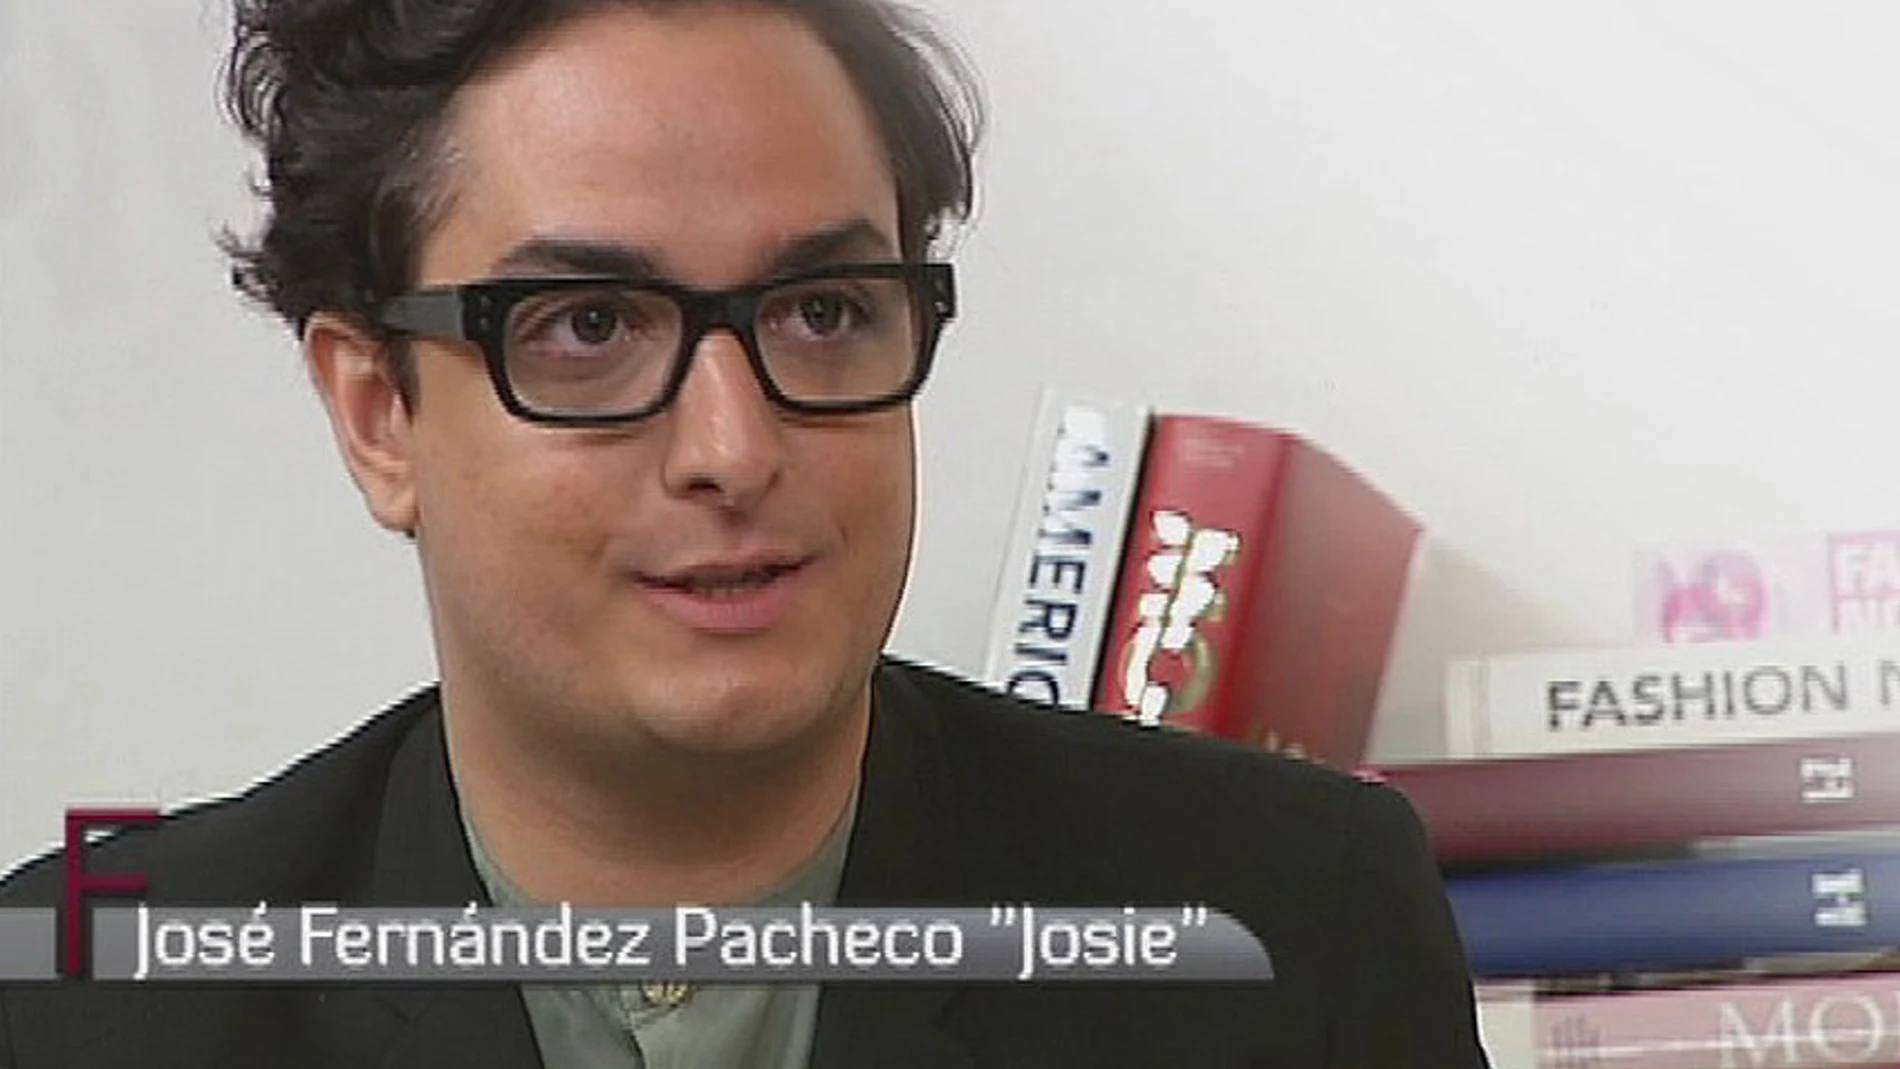 José Fernández Pachecho "Josie"